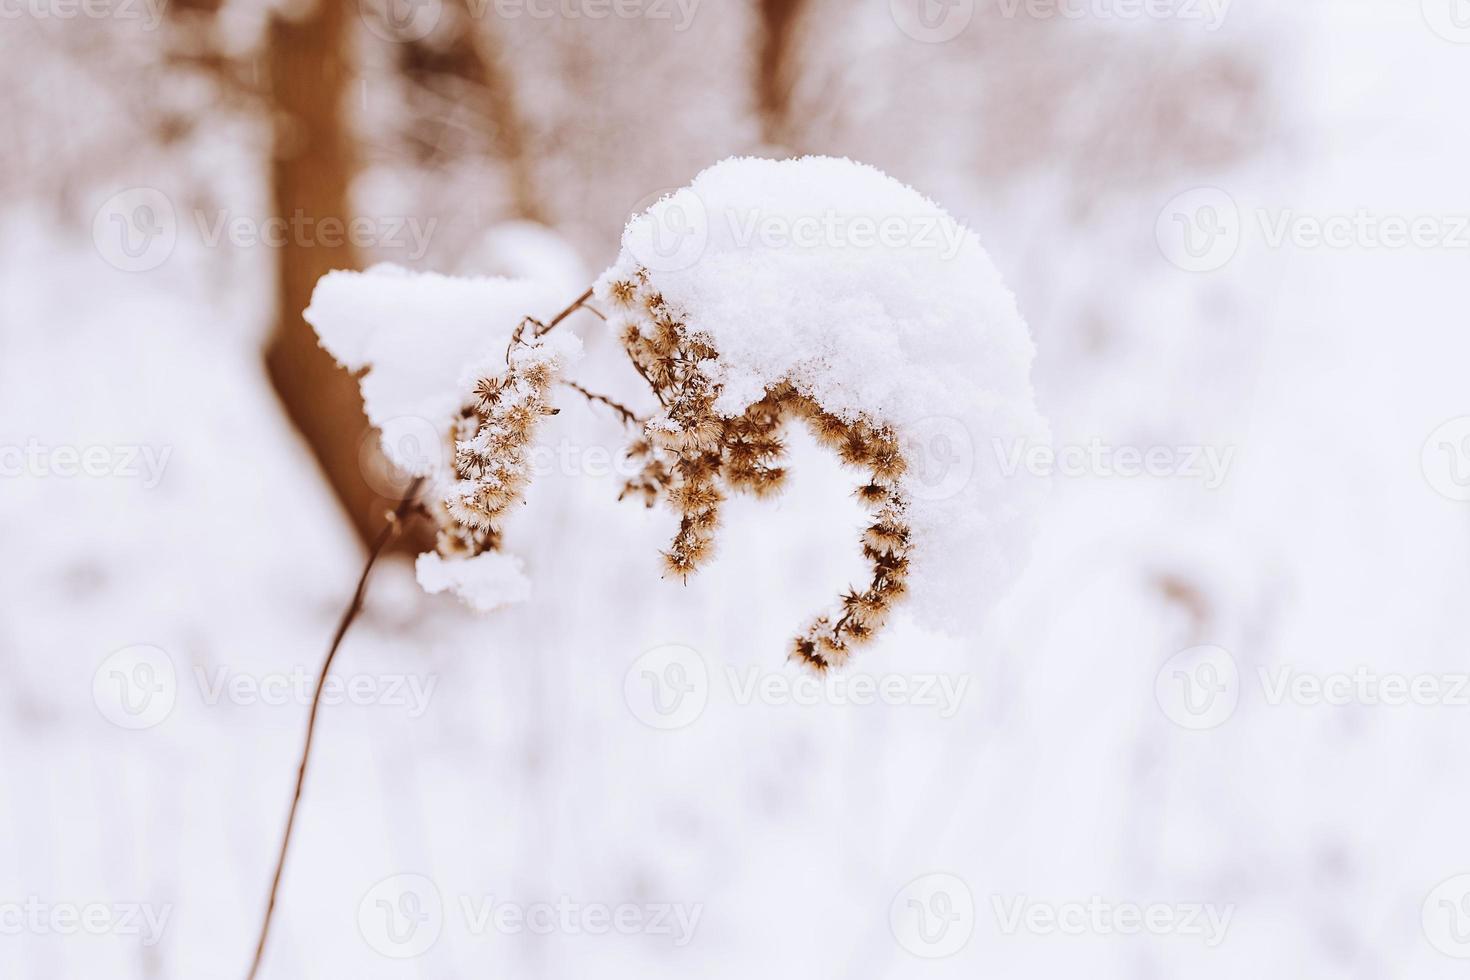 oud verdord veld- bloem in winter besneeuwd dag in de weide in detailopname foto